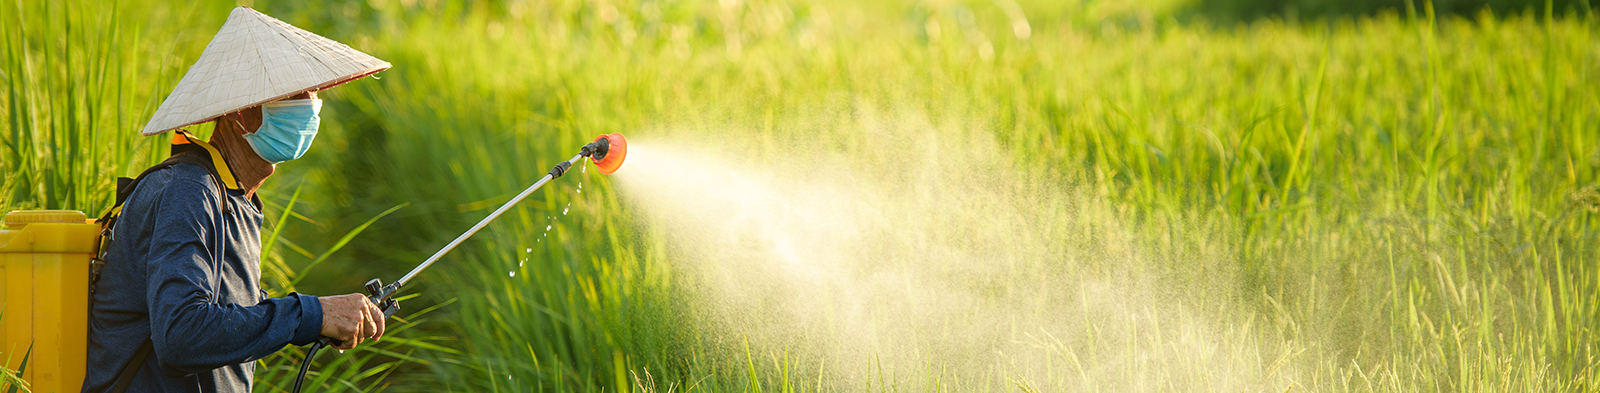 Chinese farmer sprays pesticide on crops